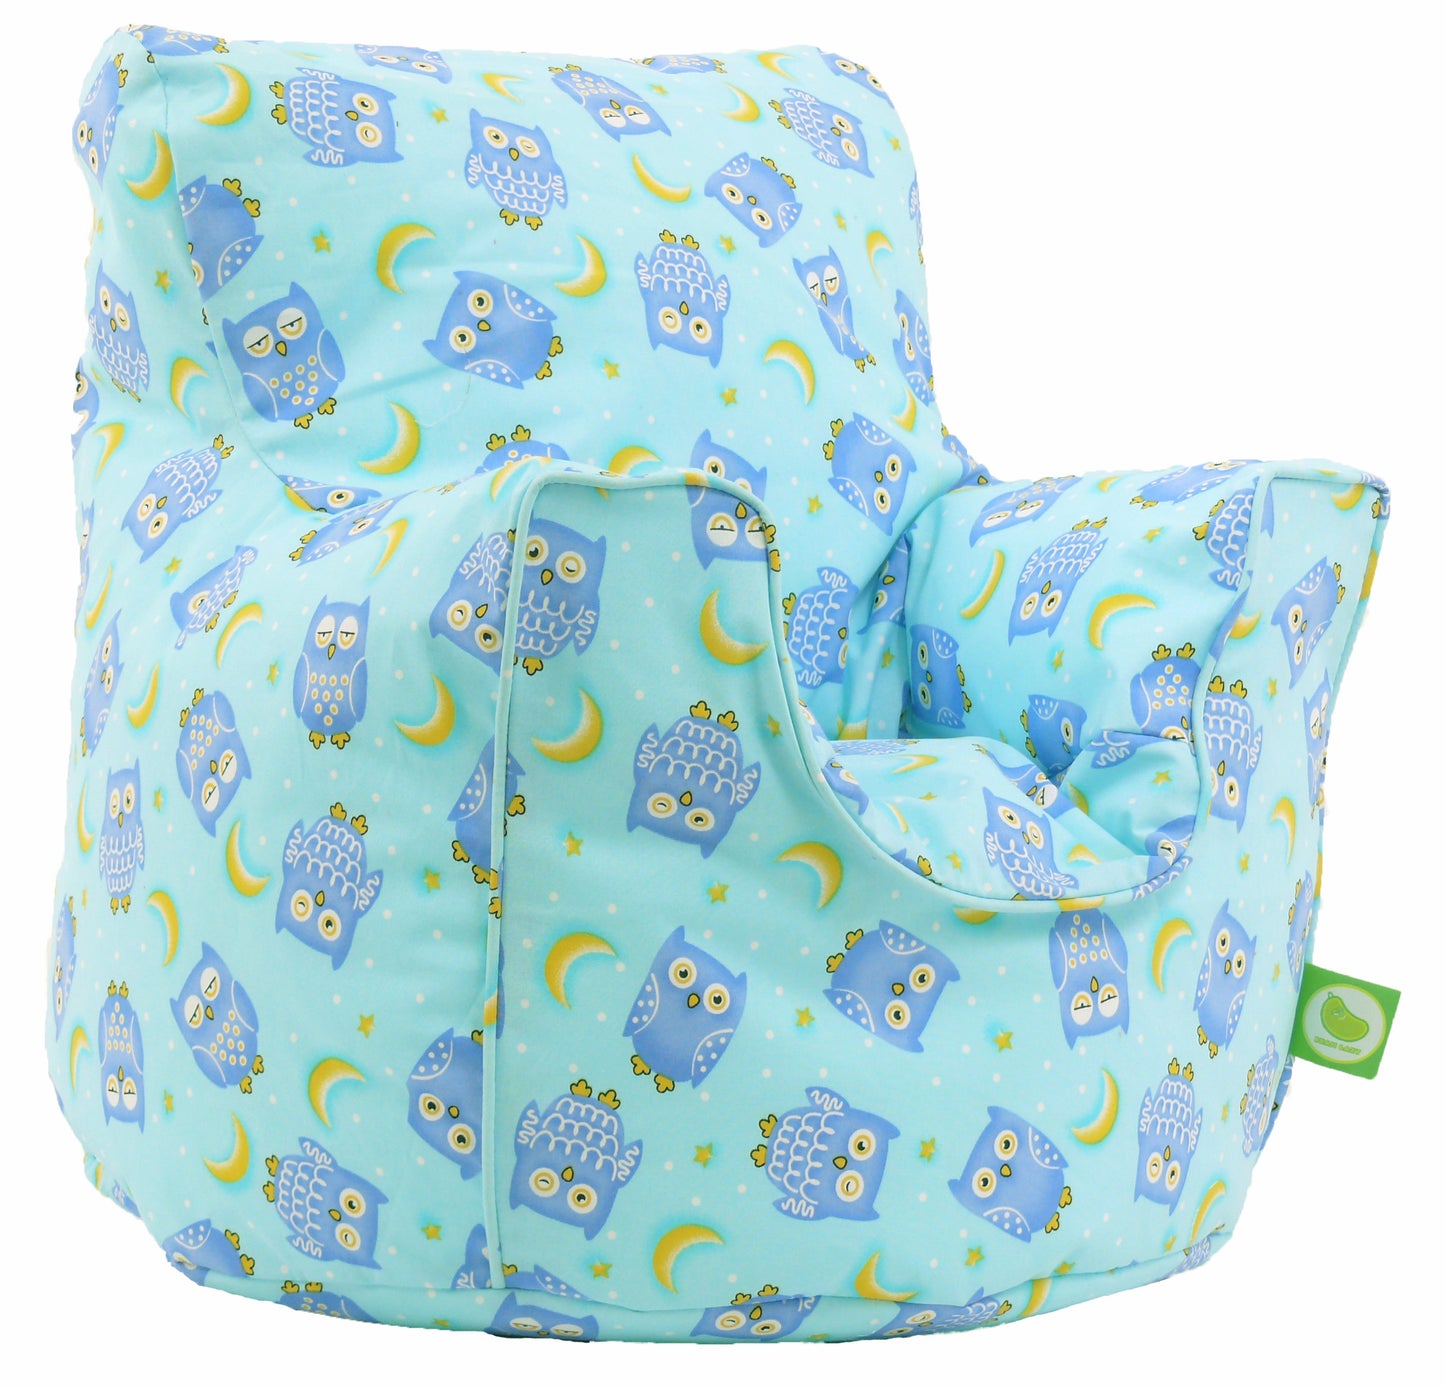 Cotton Blue Owl Bean Bag Arm Chair Toddler Size